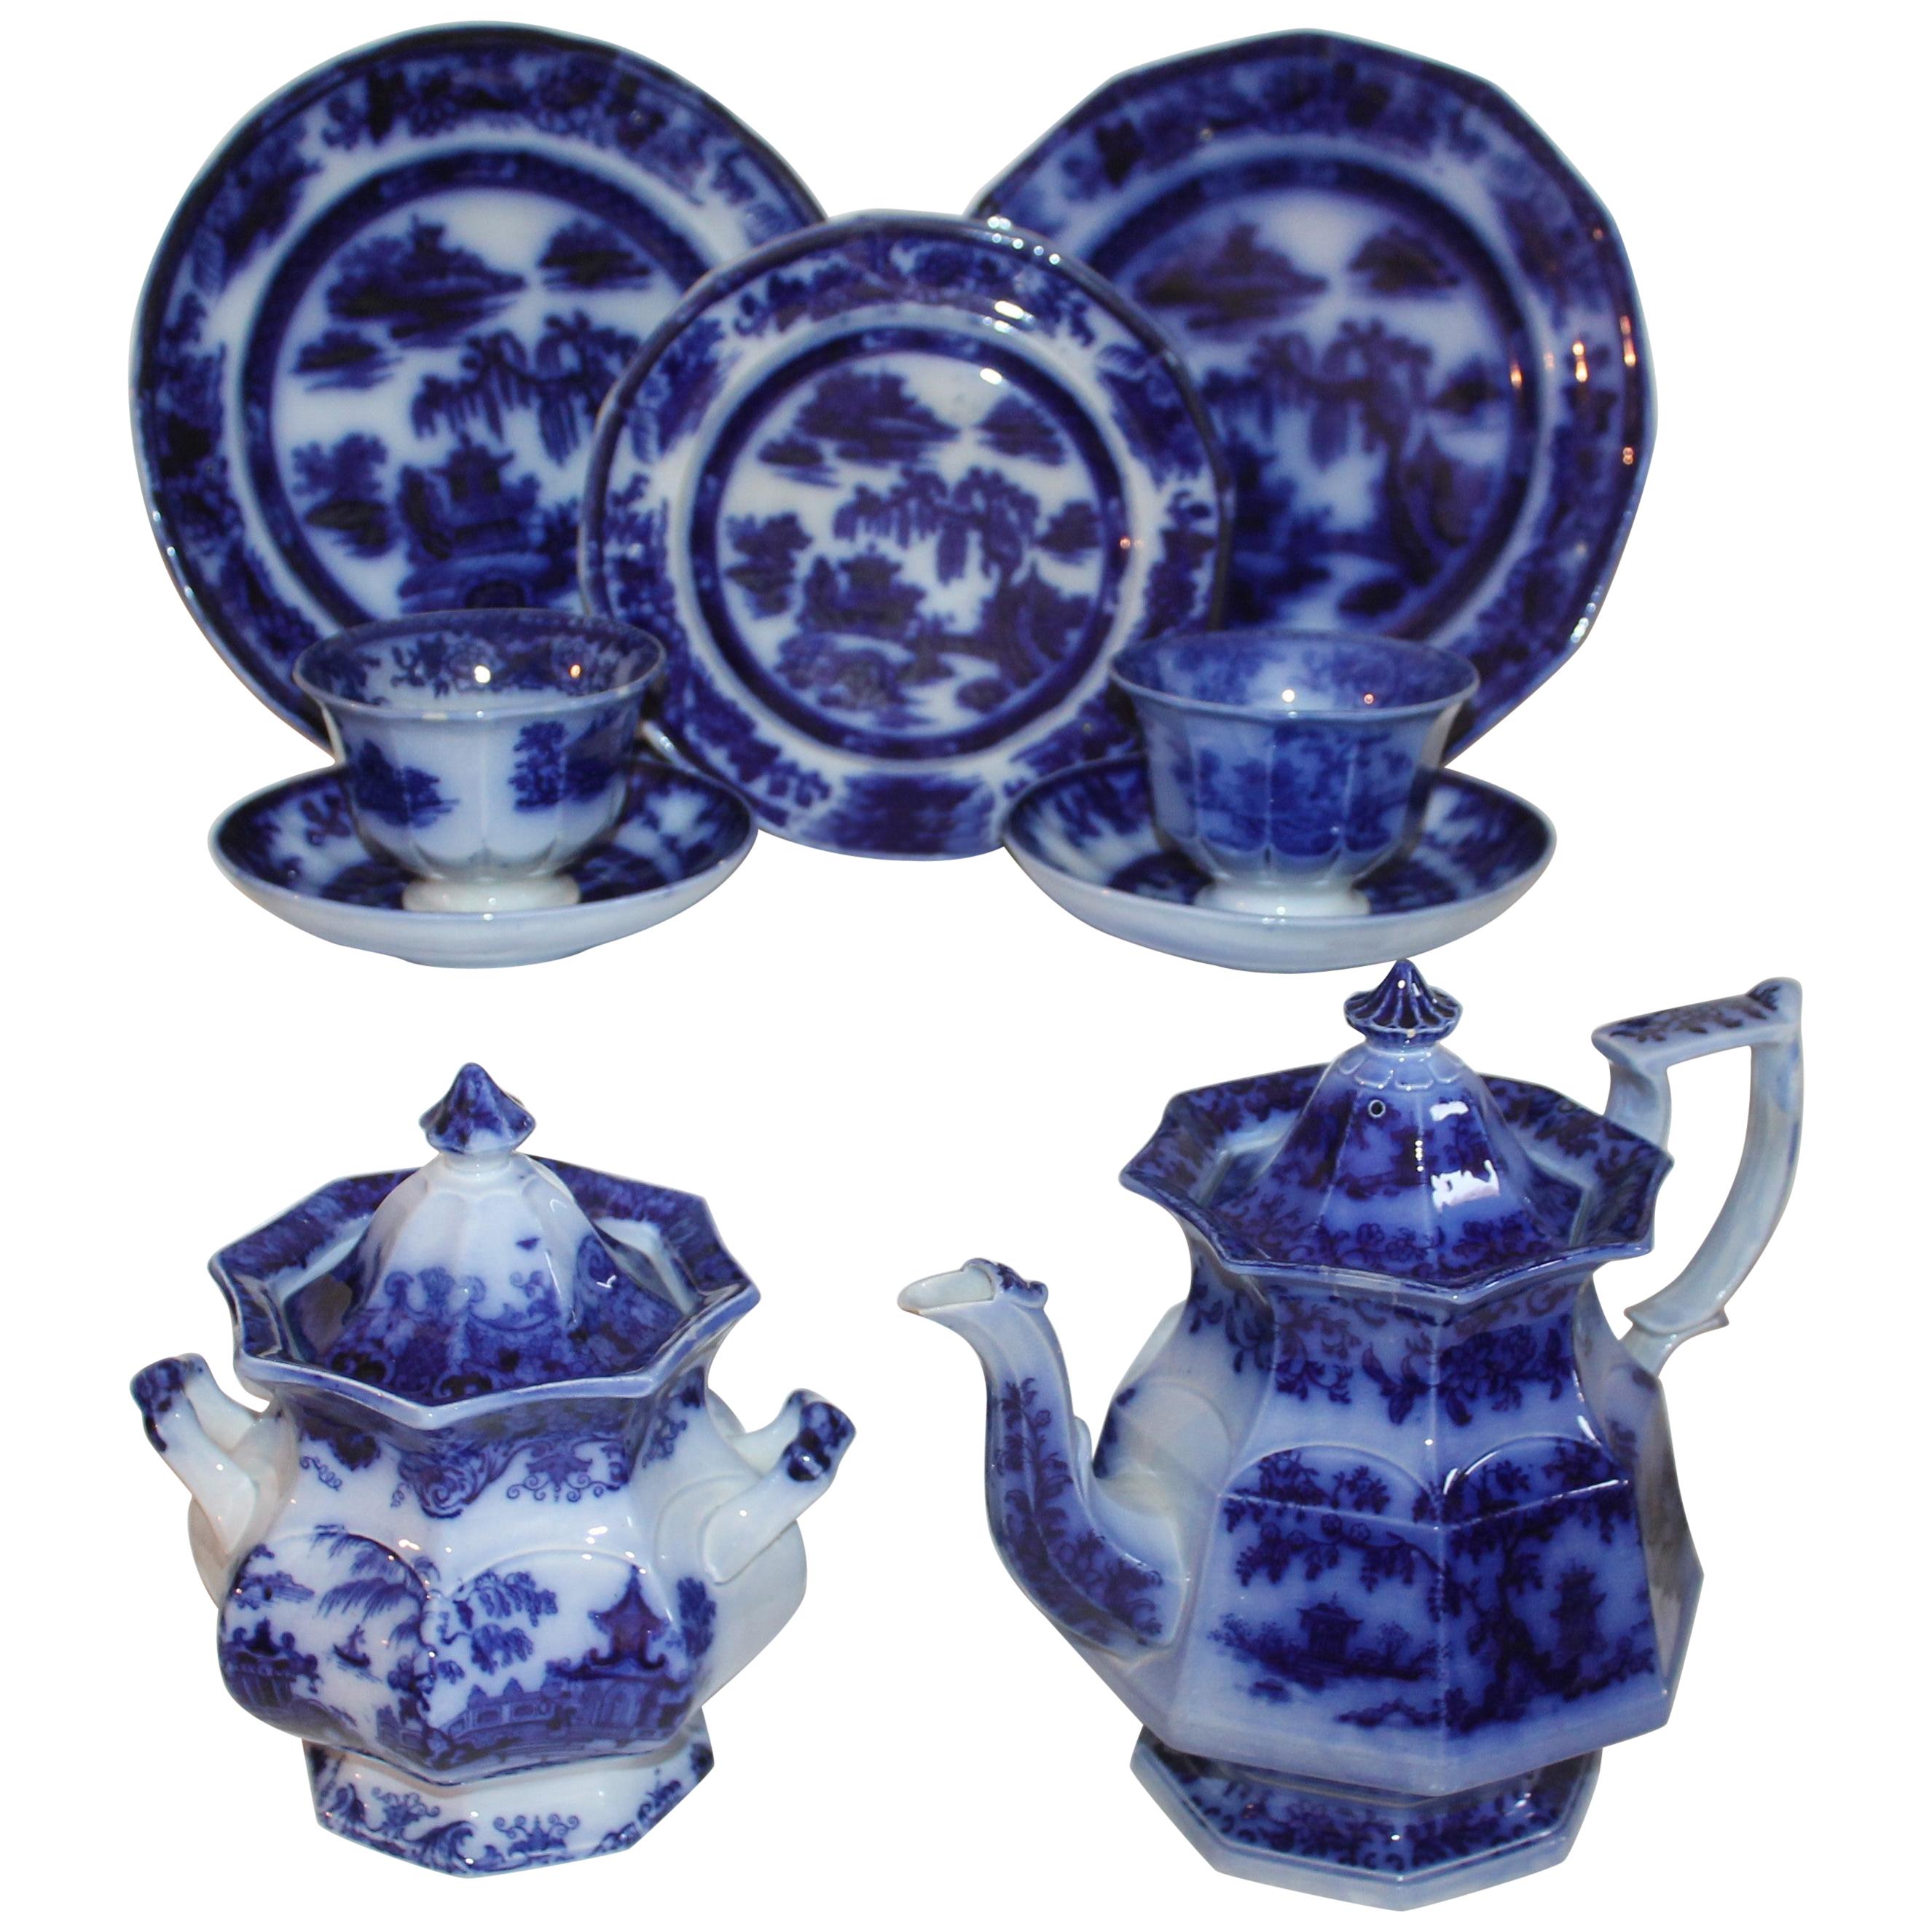 Flo-Blue Collection of 9 Piece Matching "Formosa" Tea Set